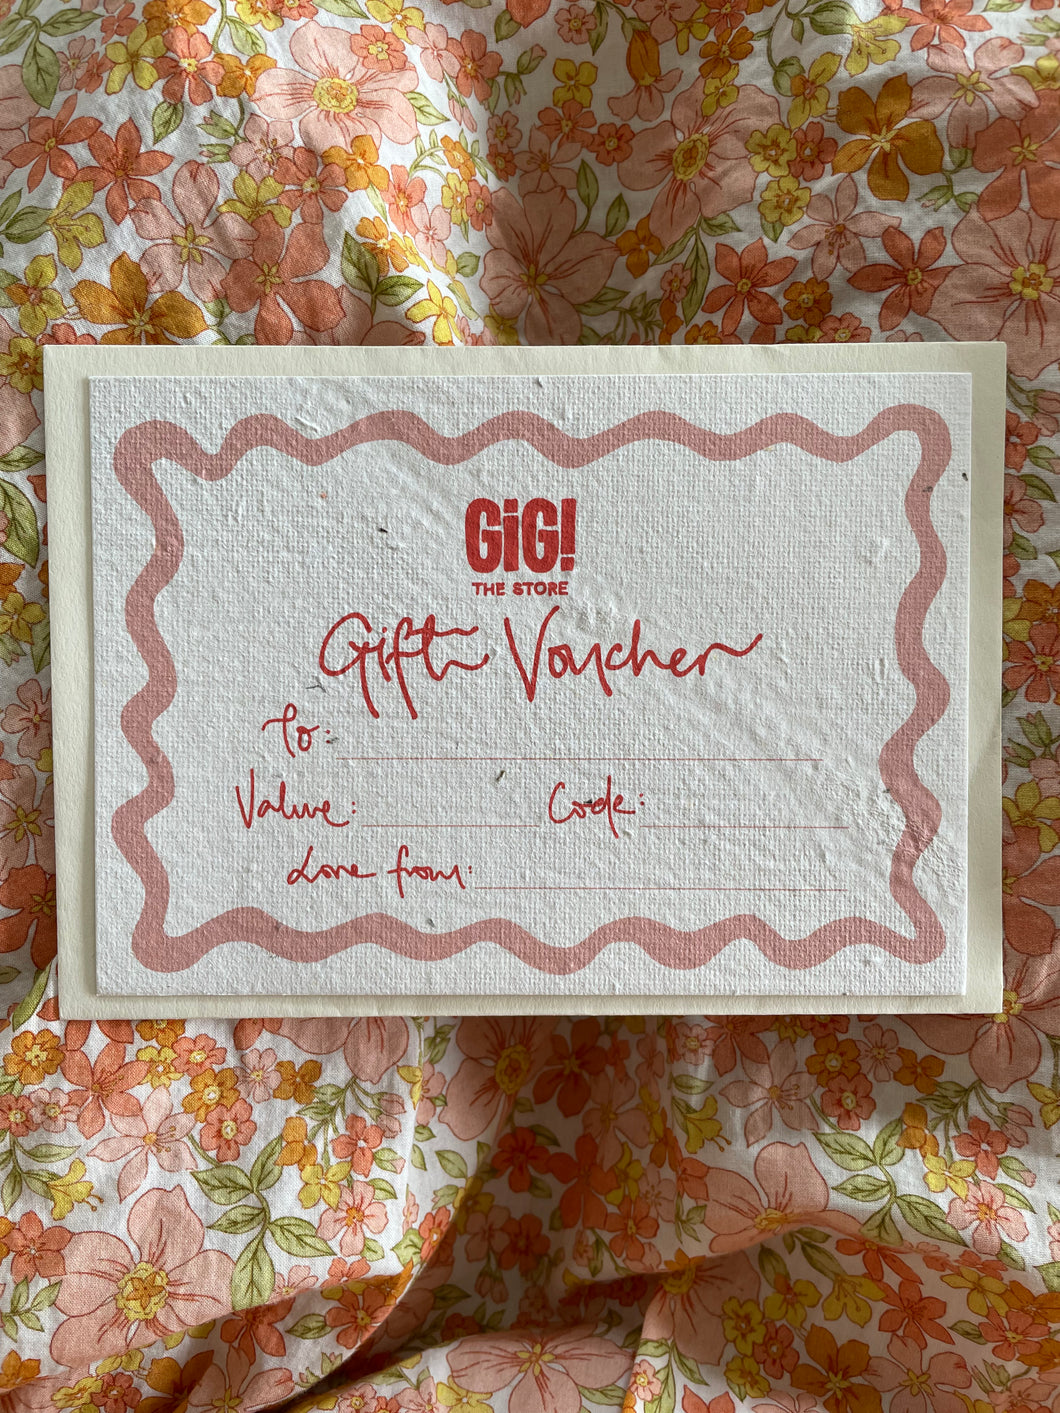 Gigi the store gift card